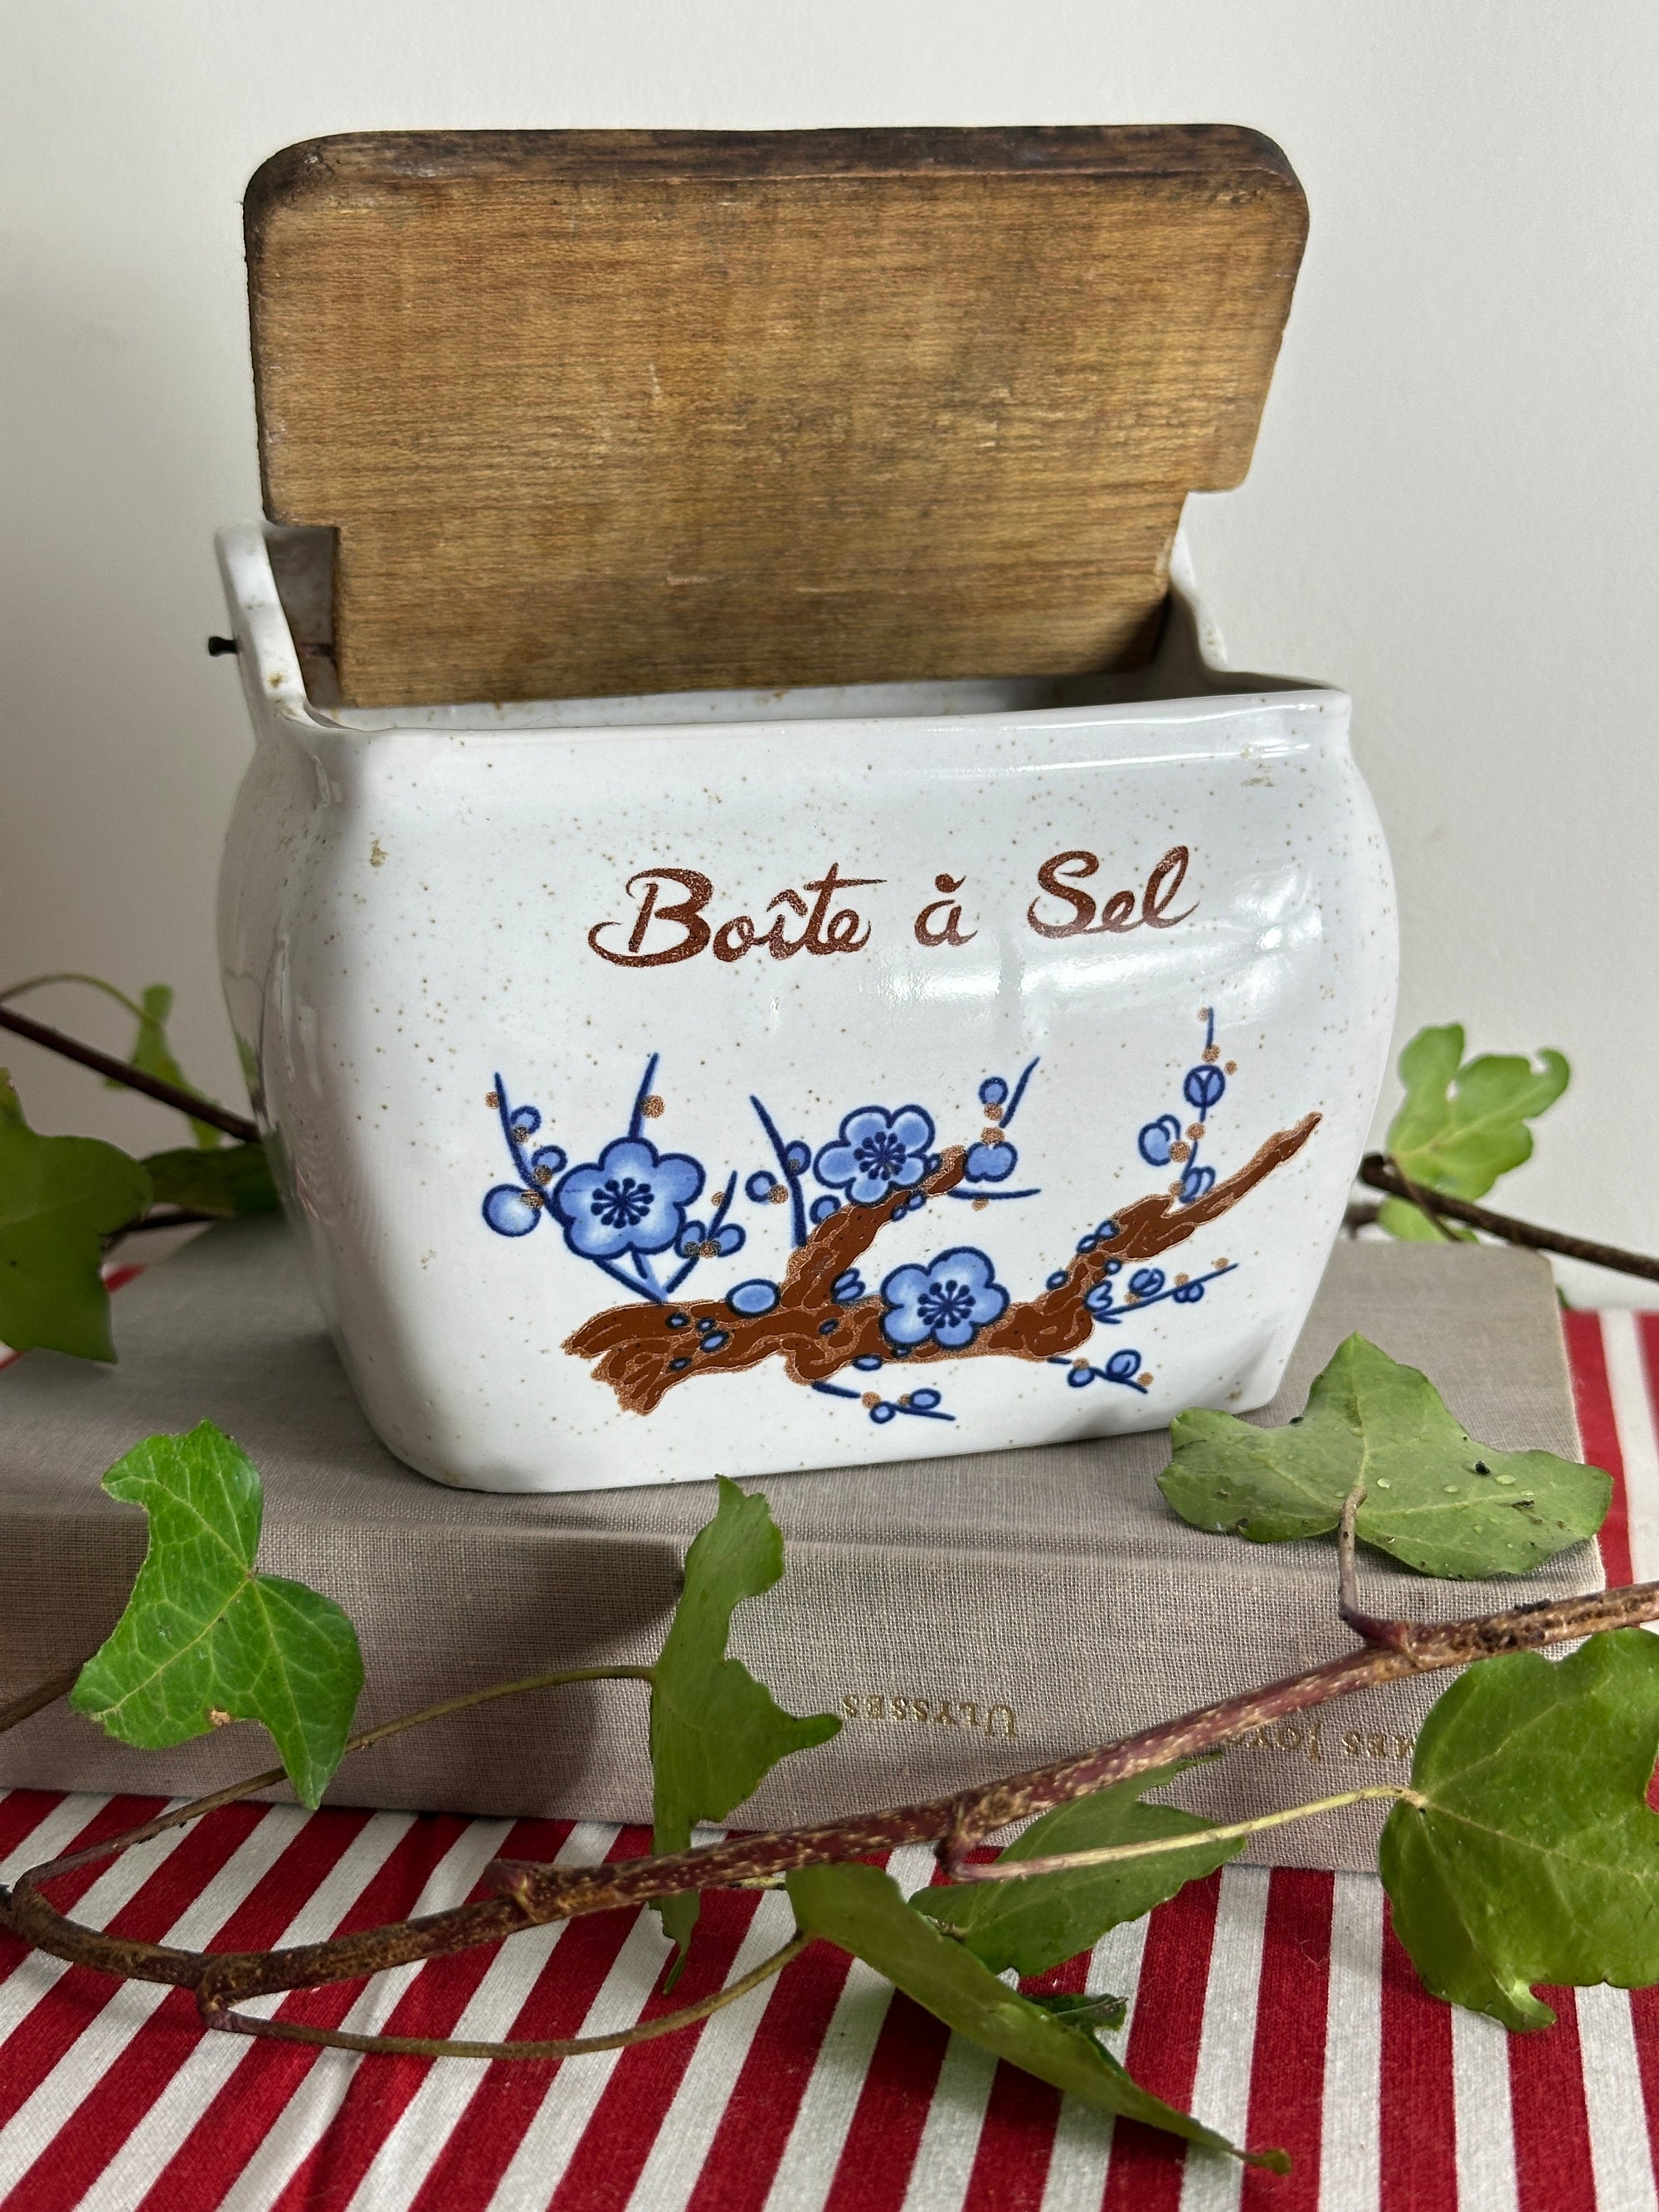 Vintage French salt box